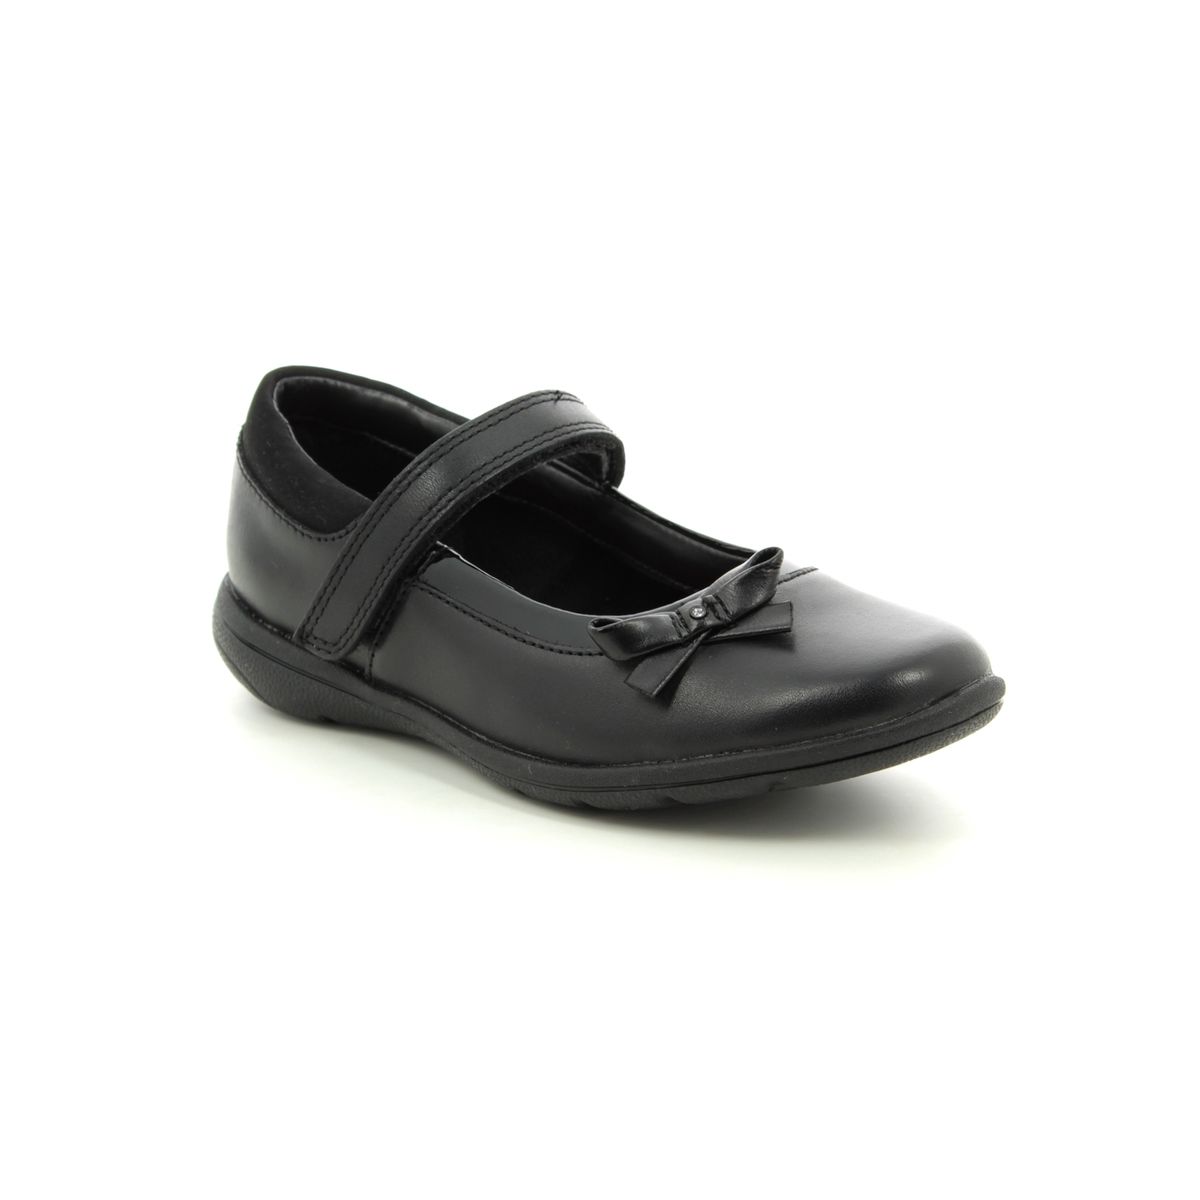 clarks black leather school shoes